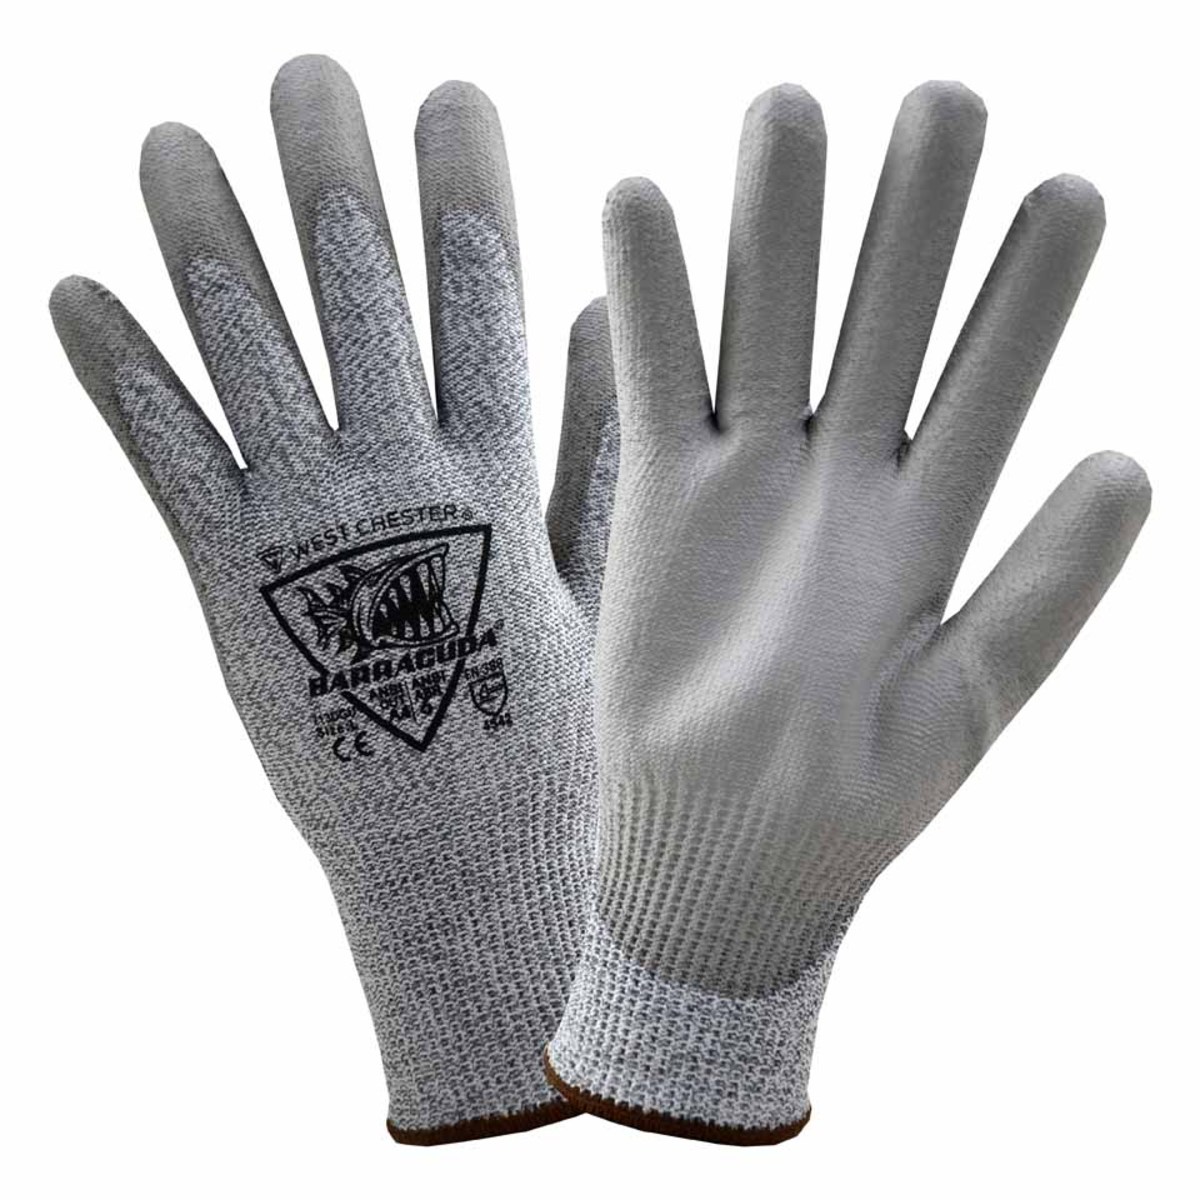 PIP® Large Barracuda® 13 Gauge High Performance Polyethylene Cut Resistant Gloves With Polyurethane Coating